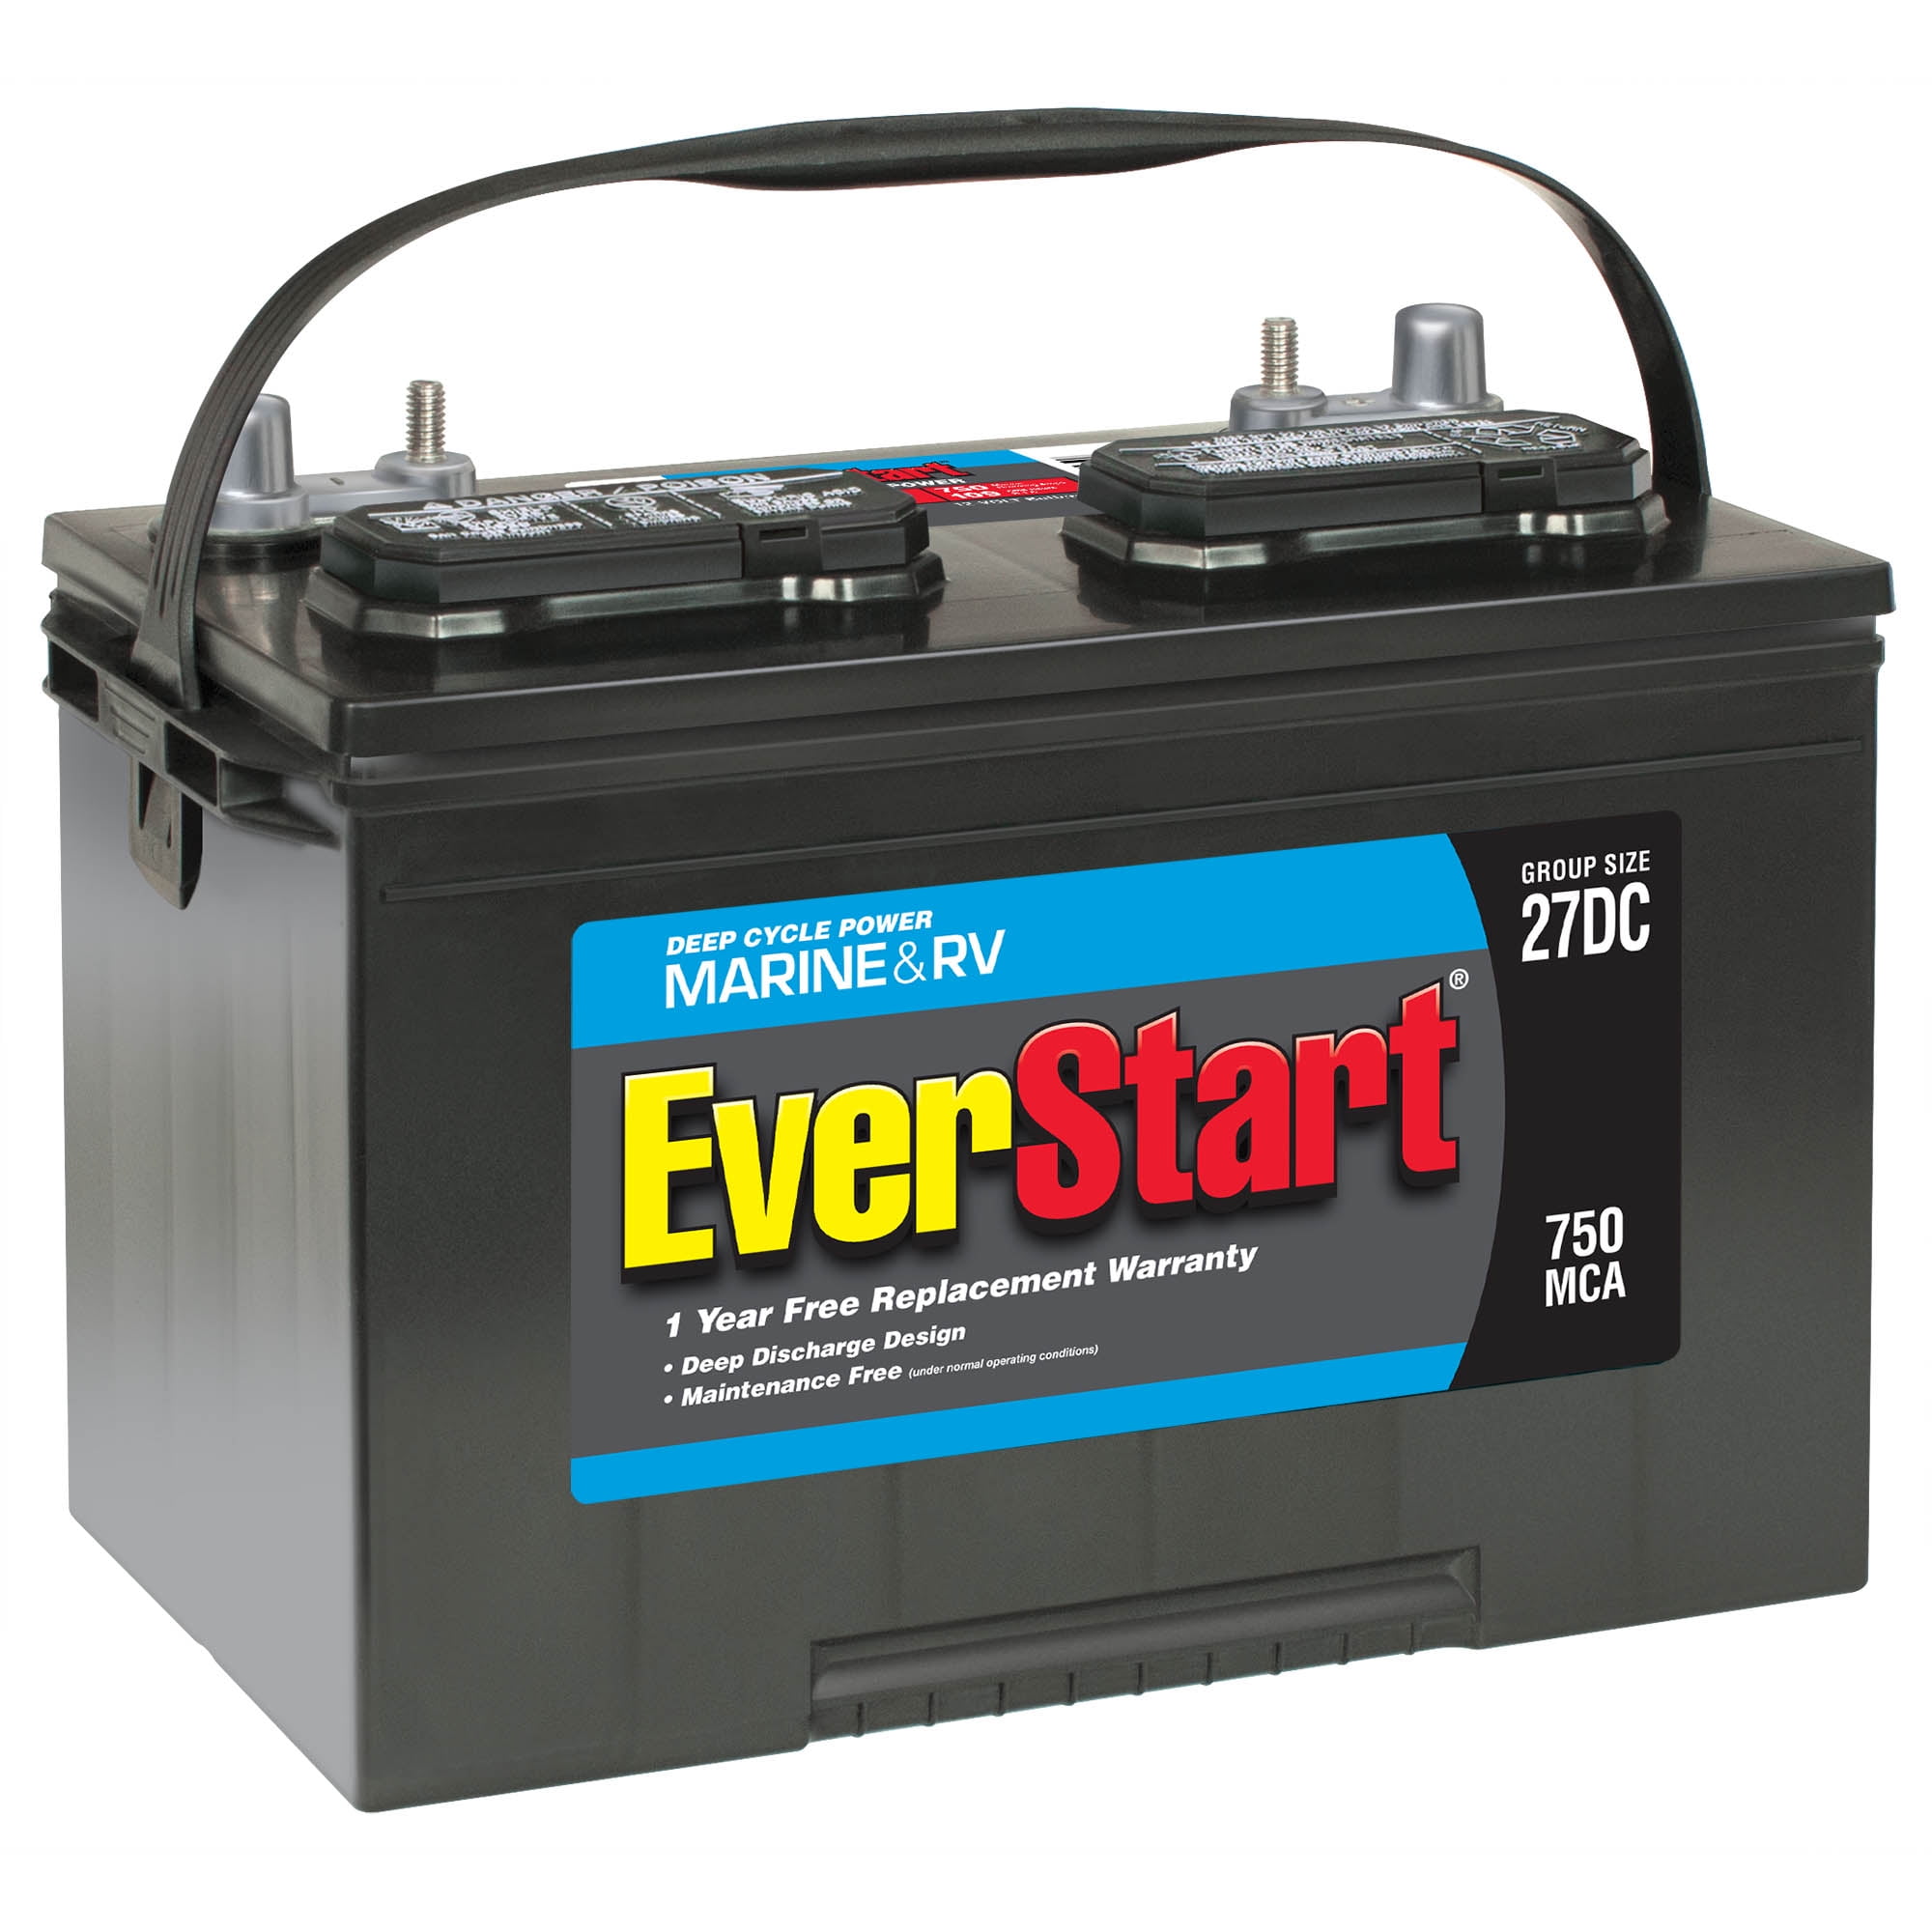 EverStart Lead Acid Marine & RV Deep Cycle Battery, Group Size 27DC (12 Everstart Lead Acid Marine & Rv Deep Cycle Battery